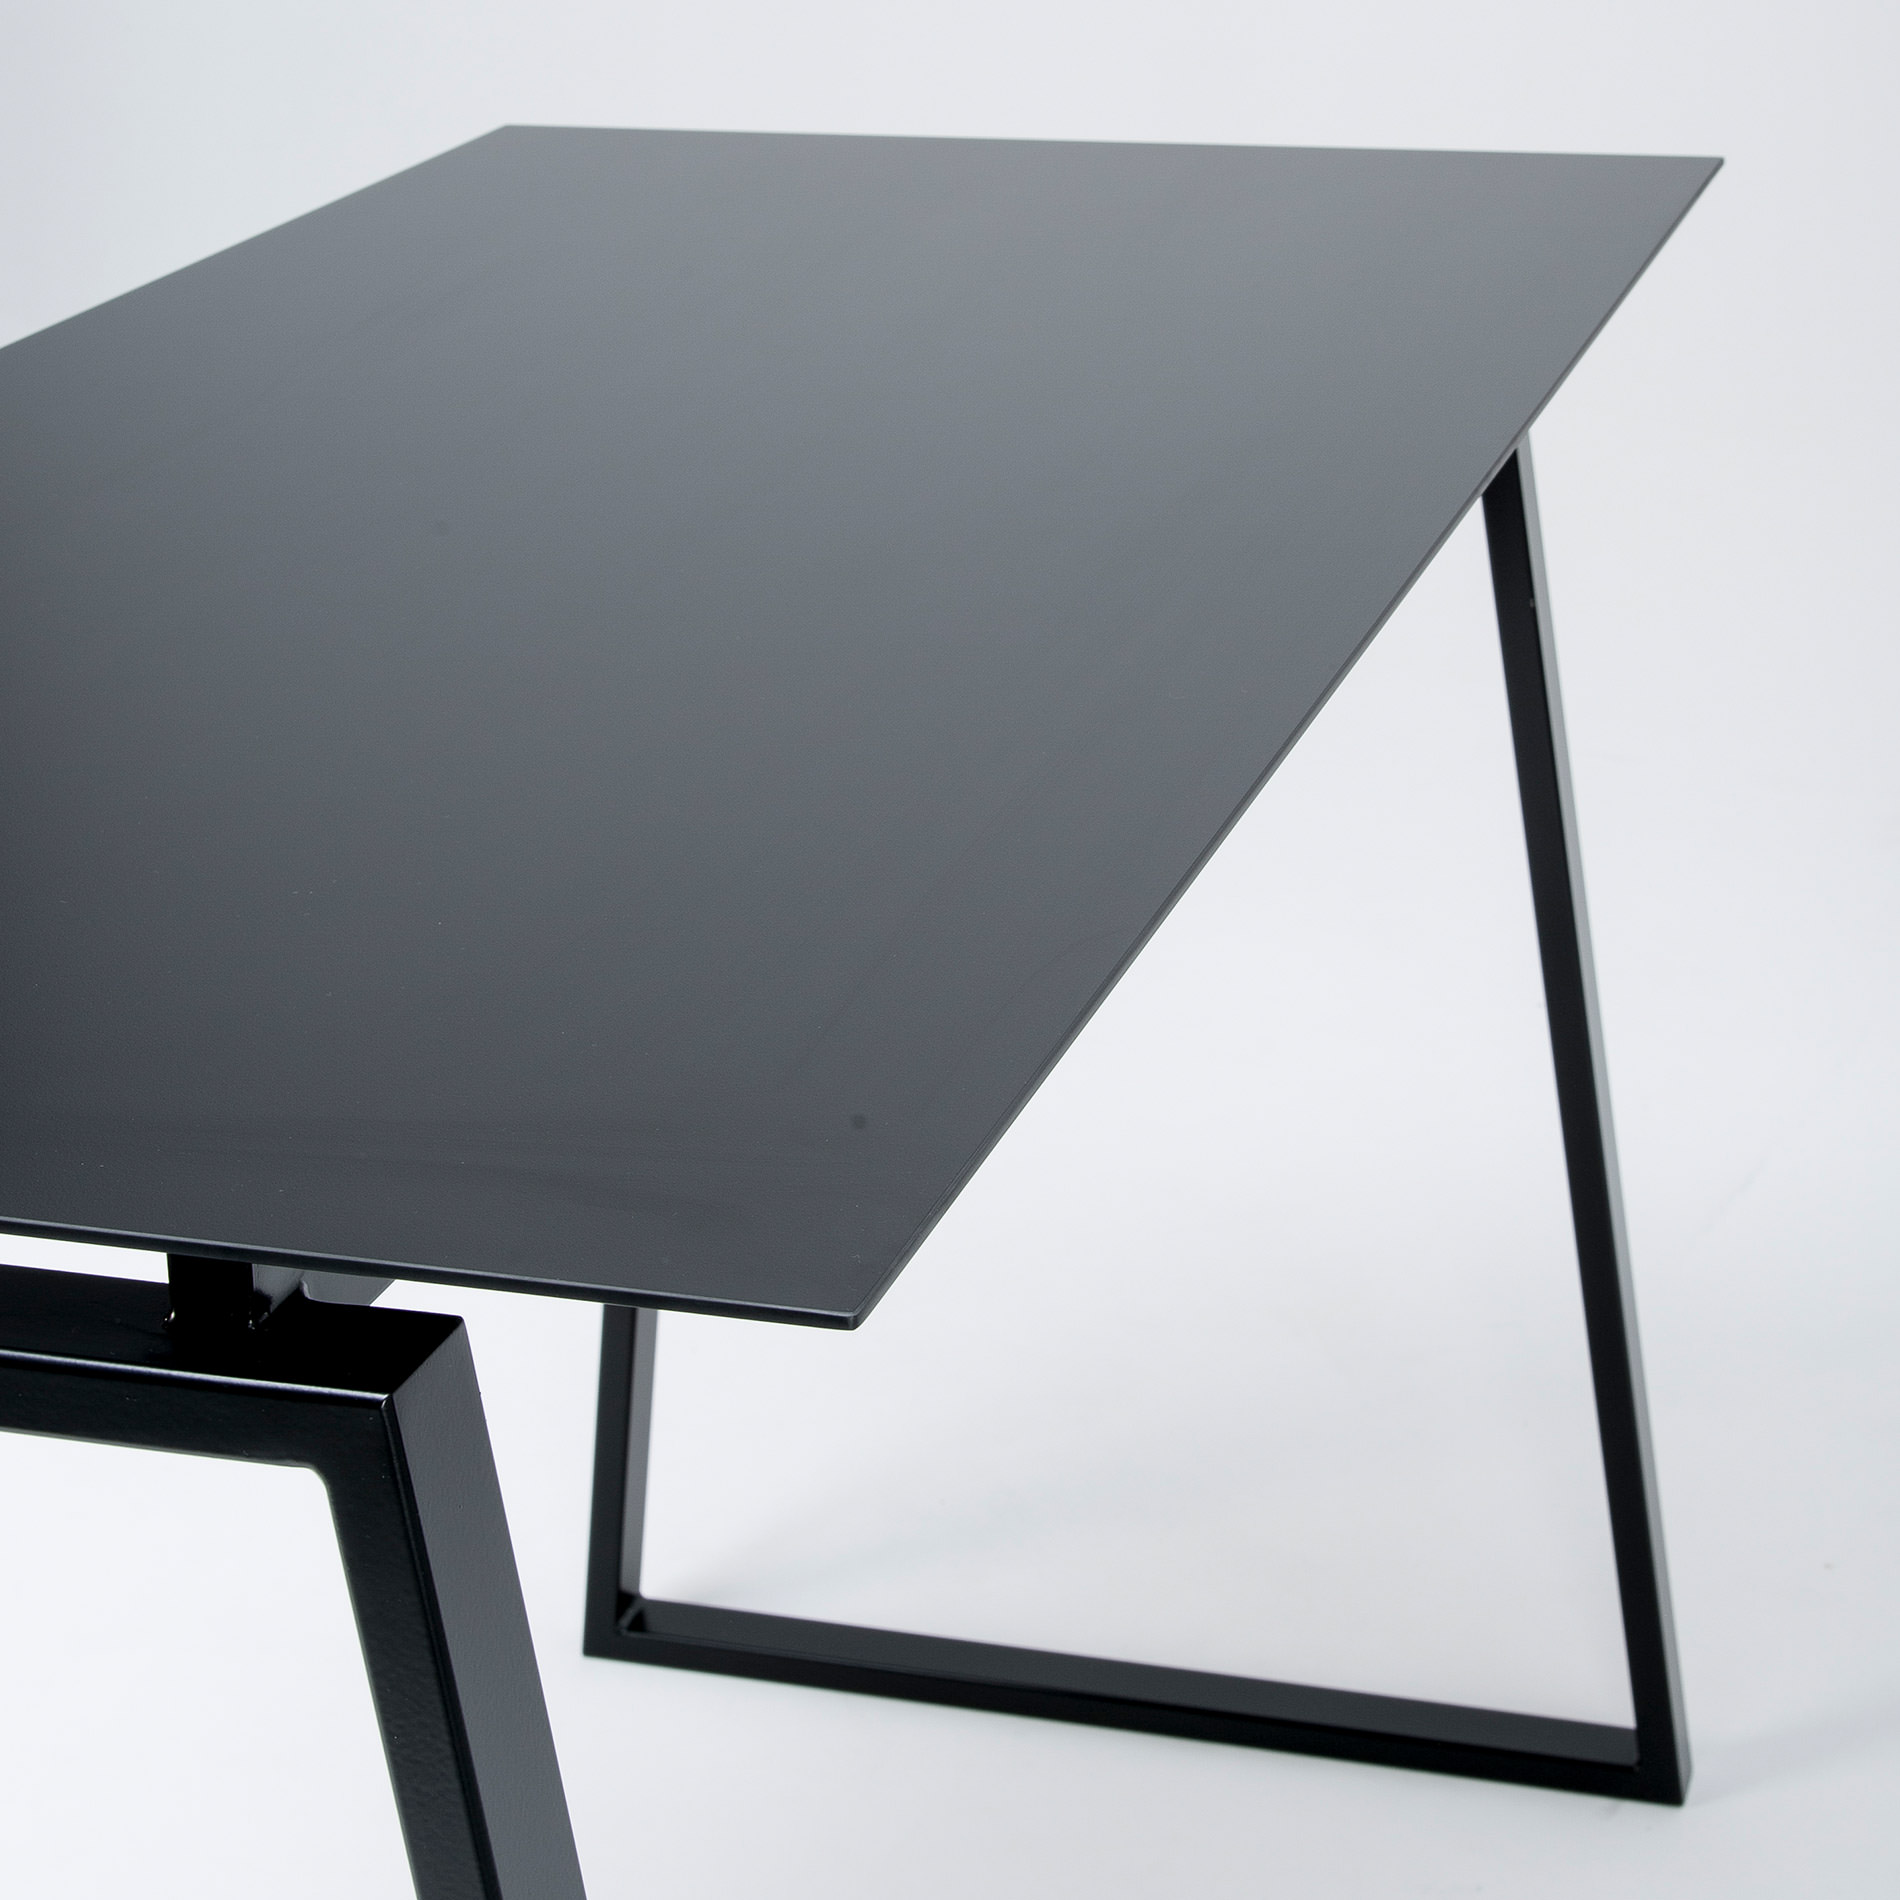 A Birdseye vein of this minimalist yet elegant special edition table by Australian designer FrancoCrea is designer black metal base and black table top